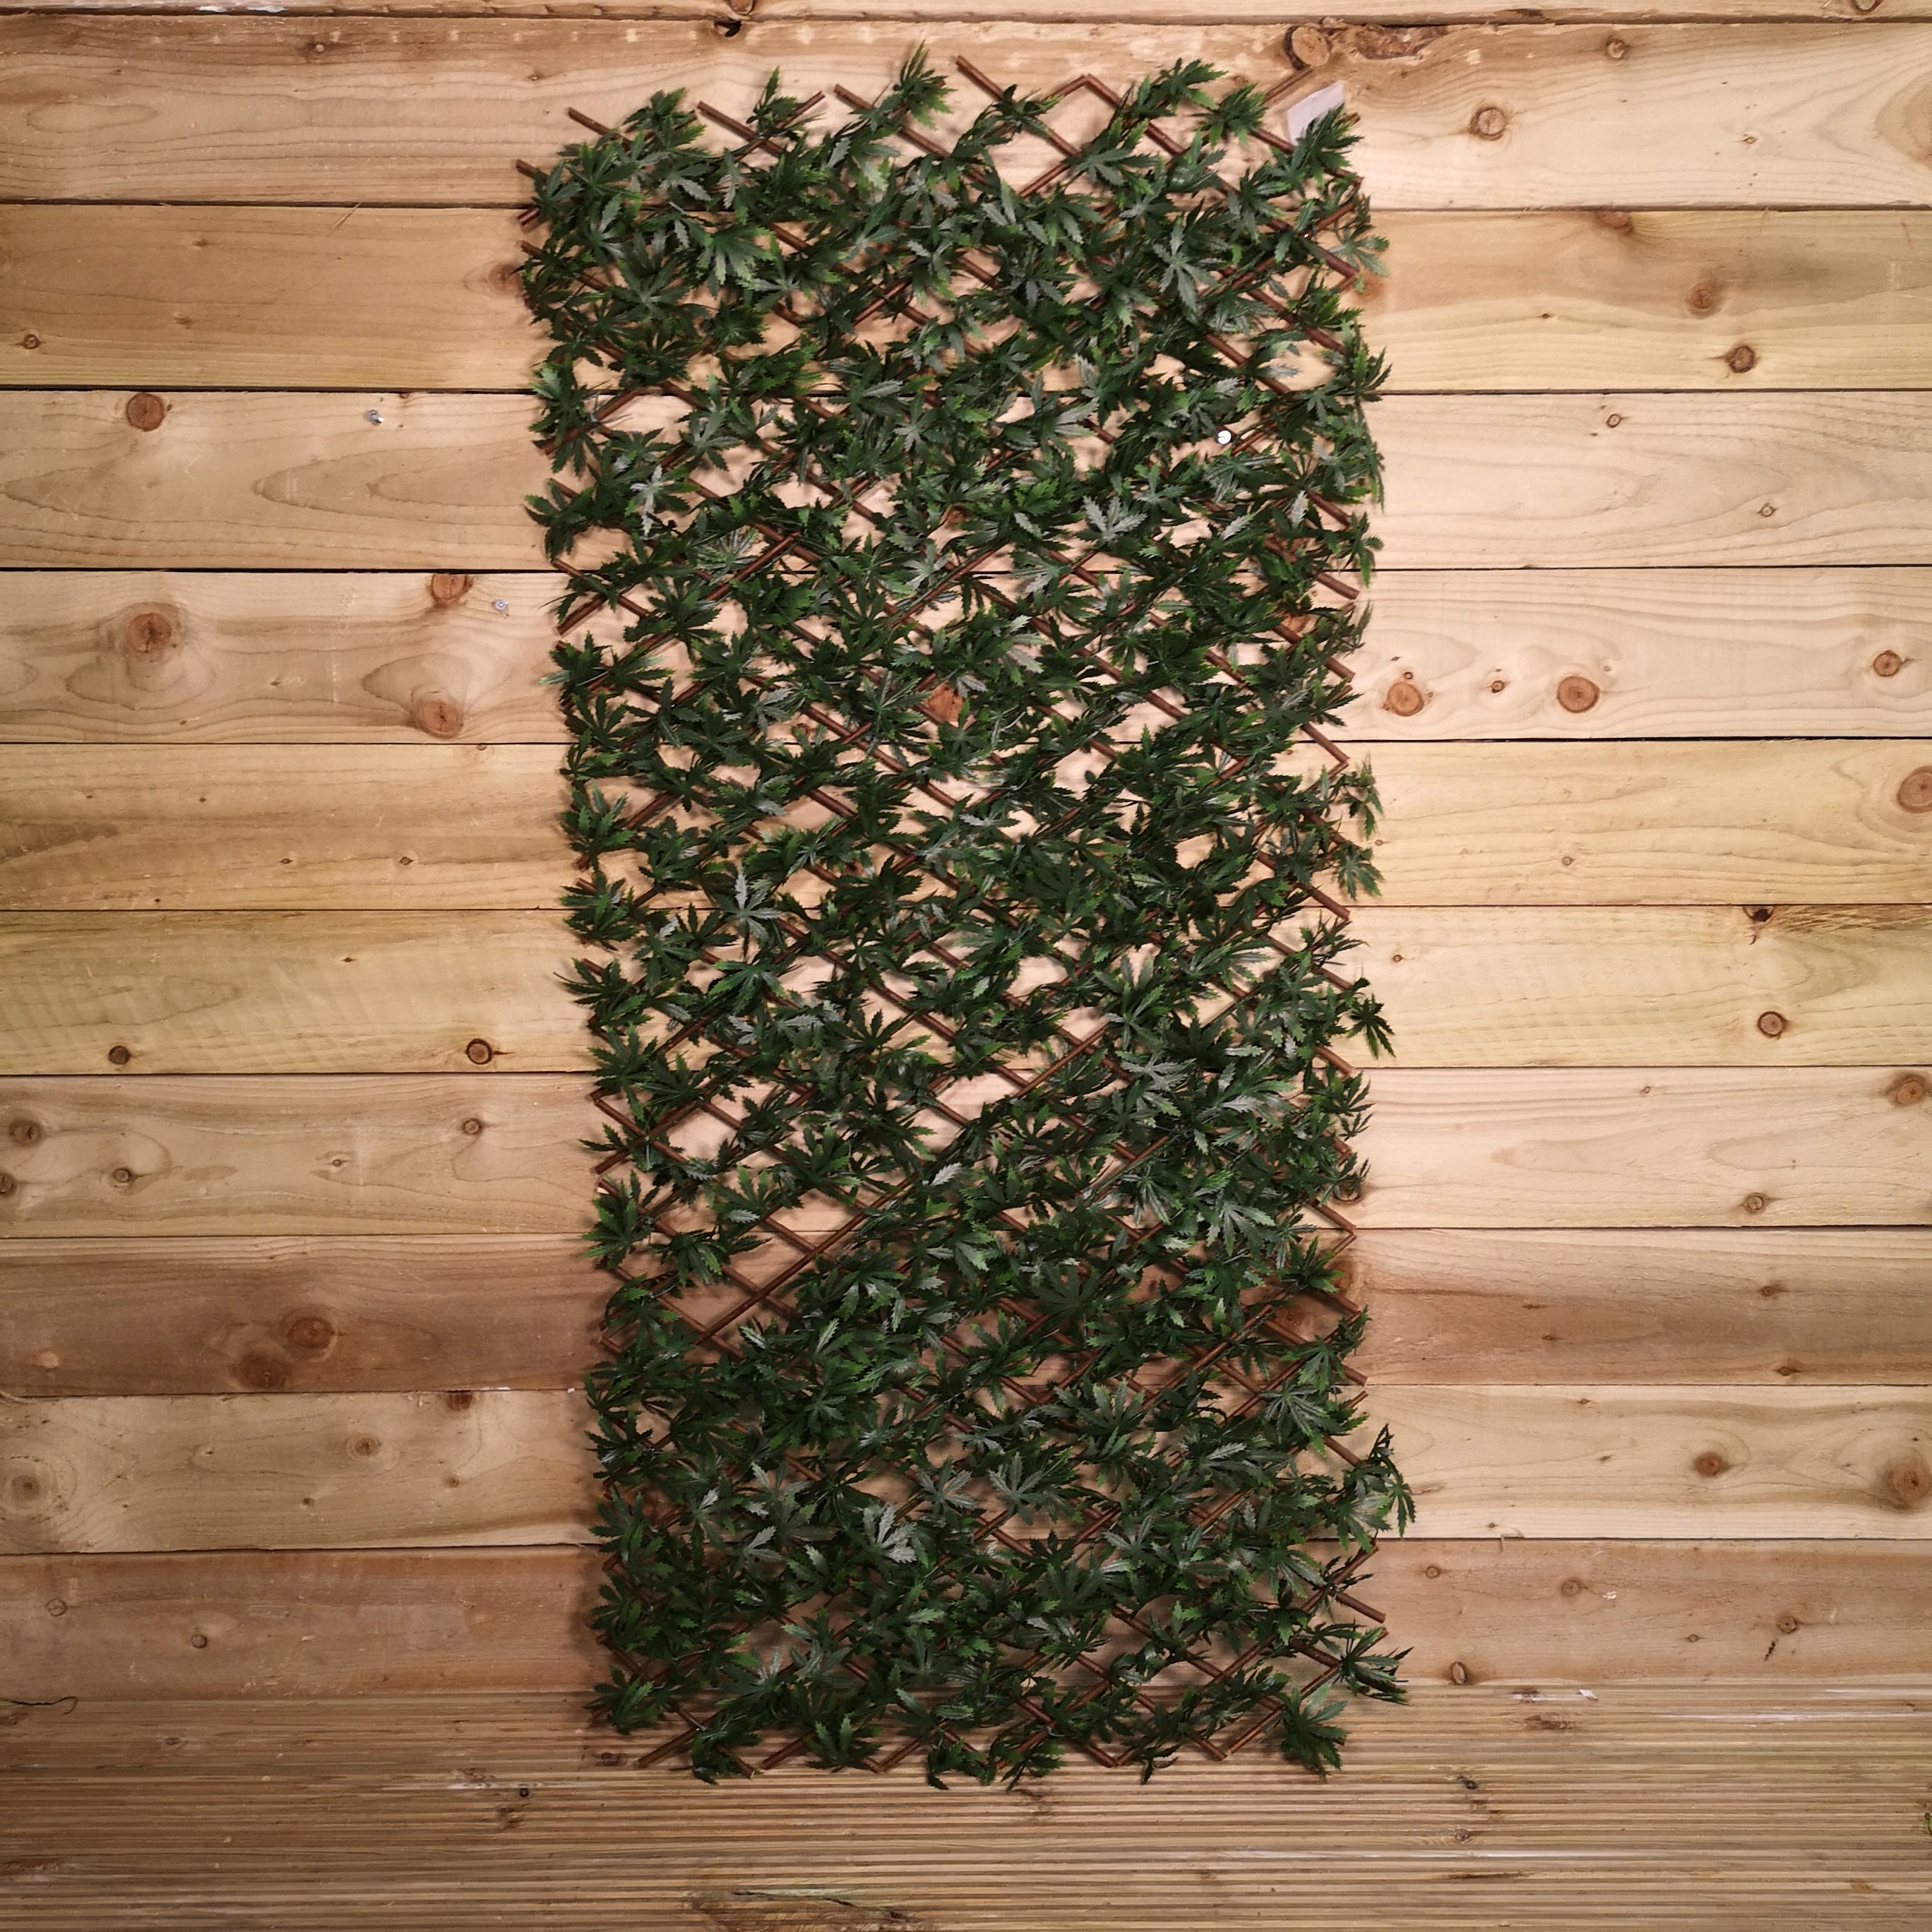 180cm x 60cm Artificial Fence Garden Trellis Privacy Screening Indoor Outdoor Wall Panel - Green Acer